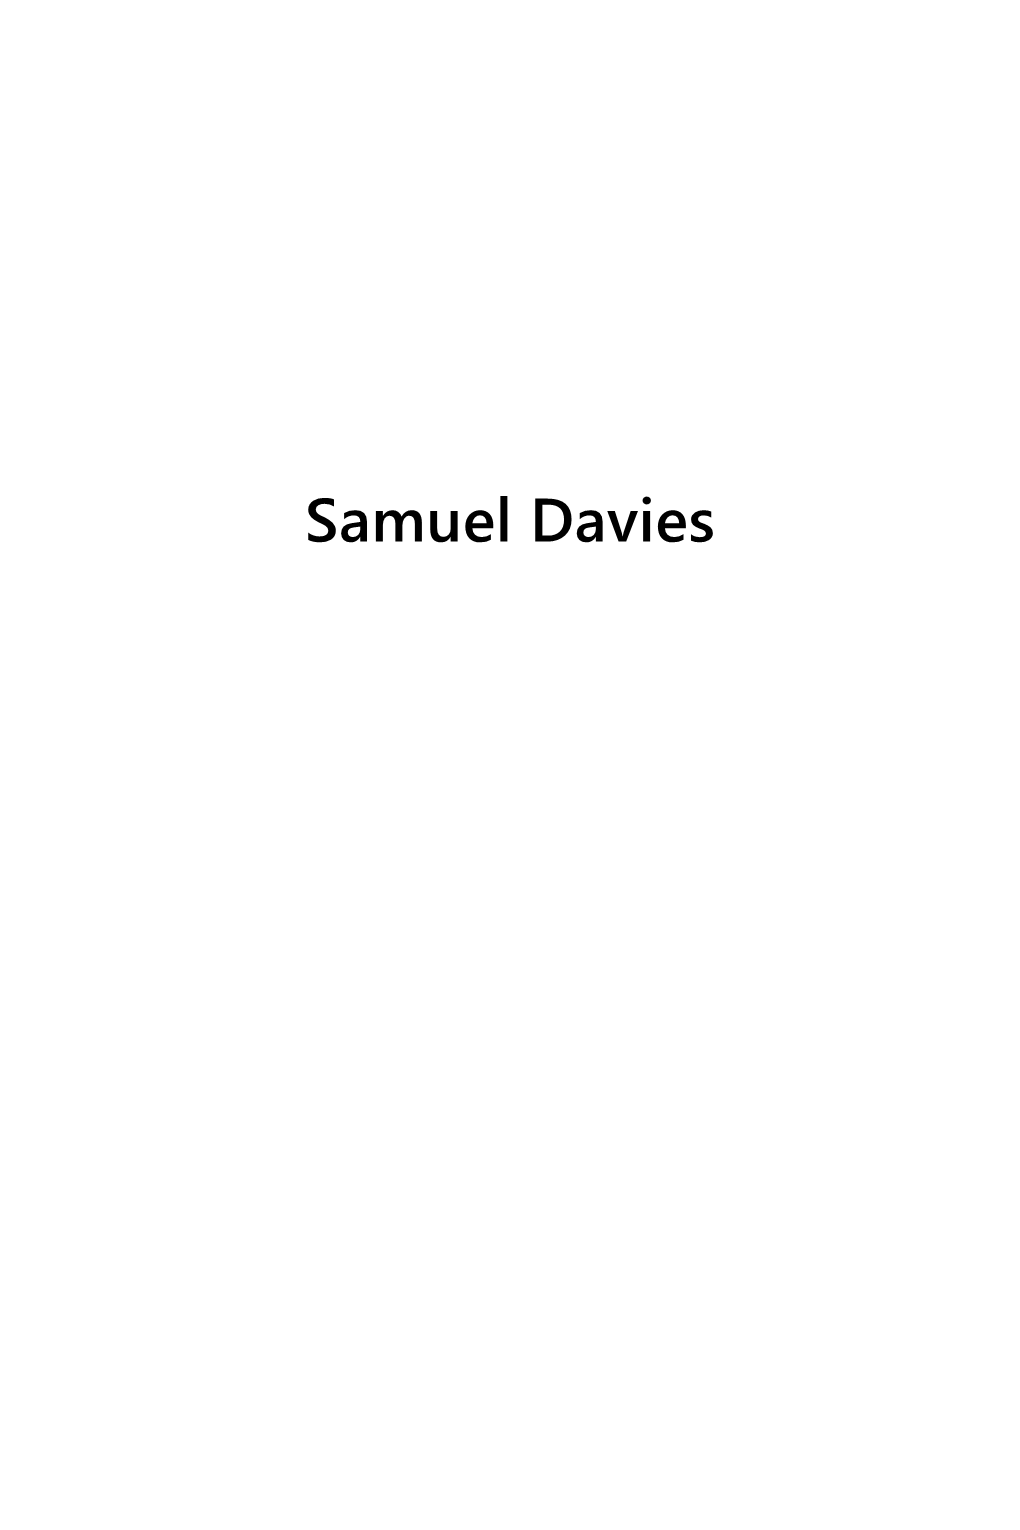 Samuel Davies